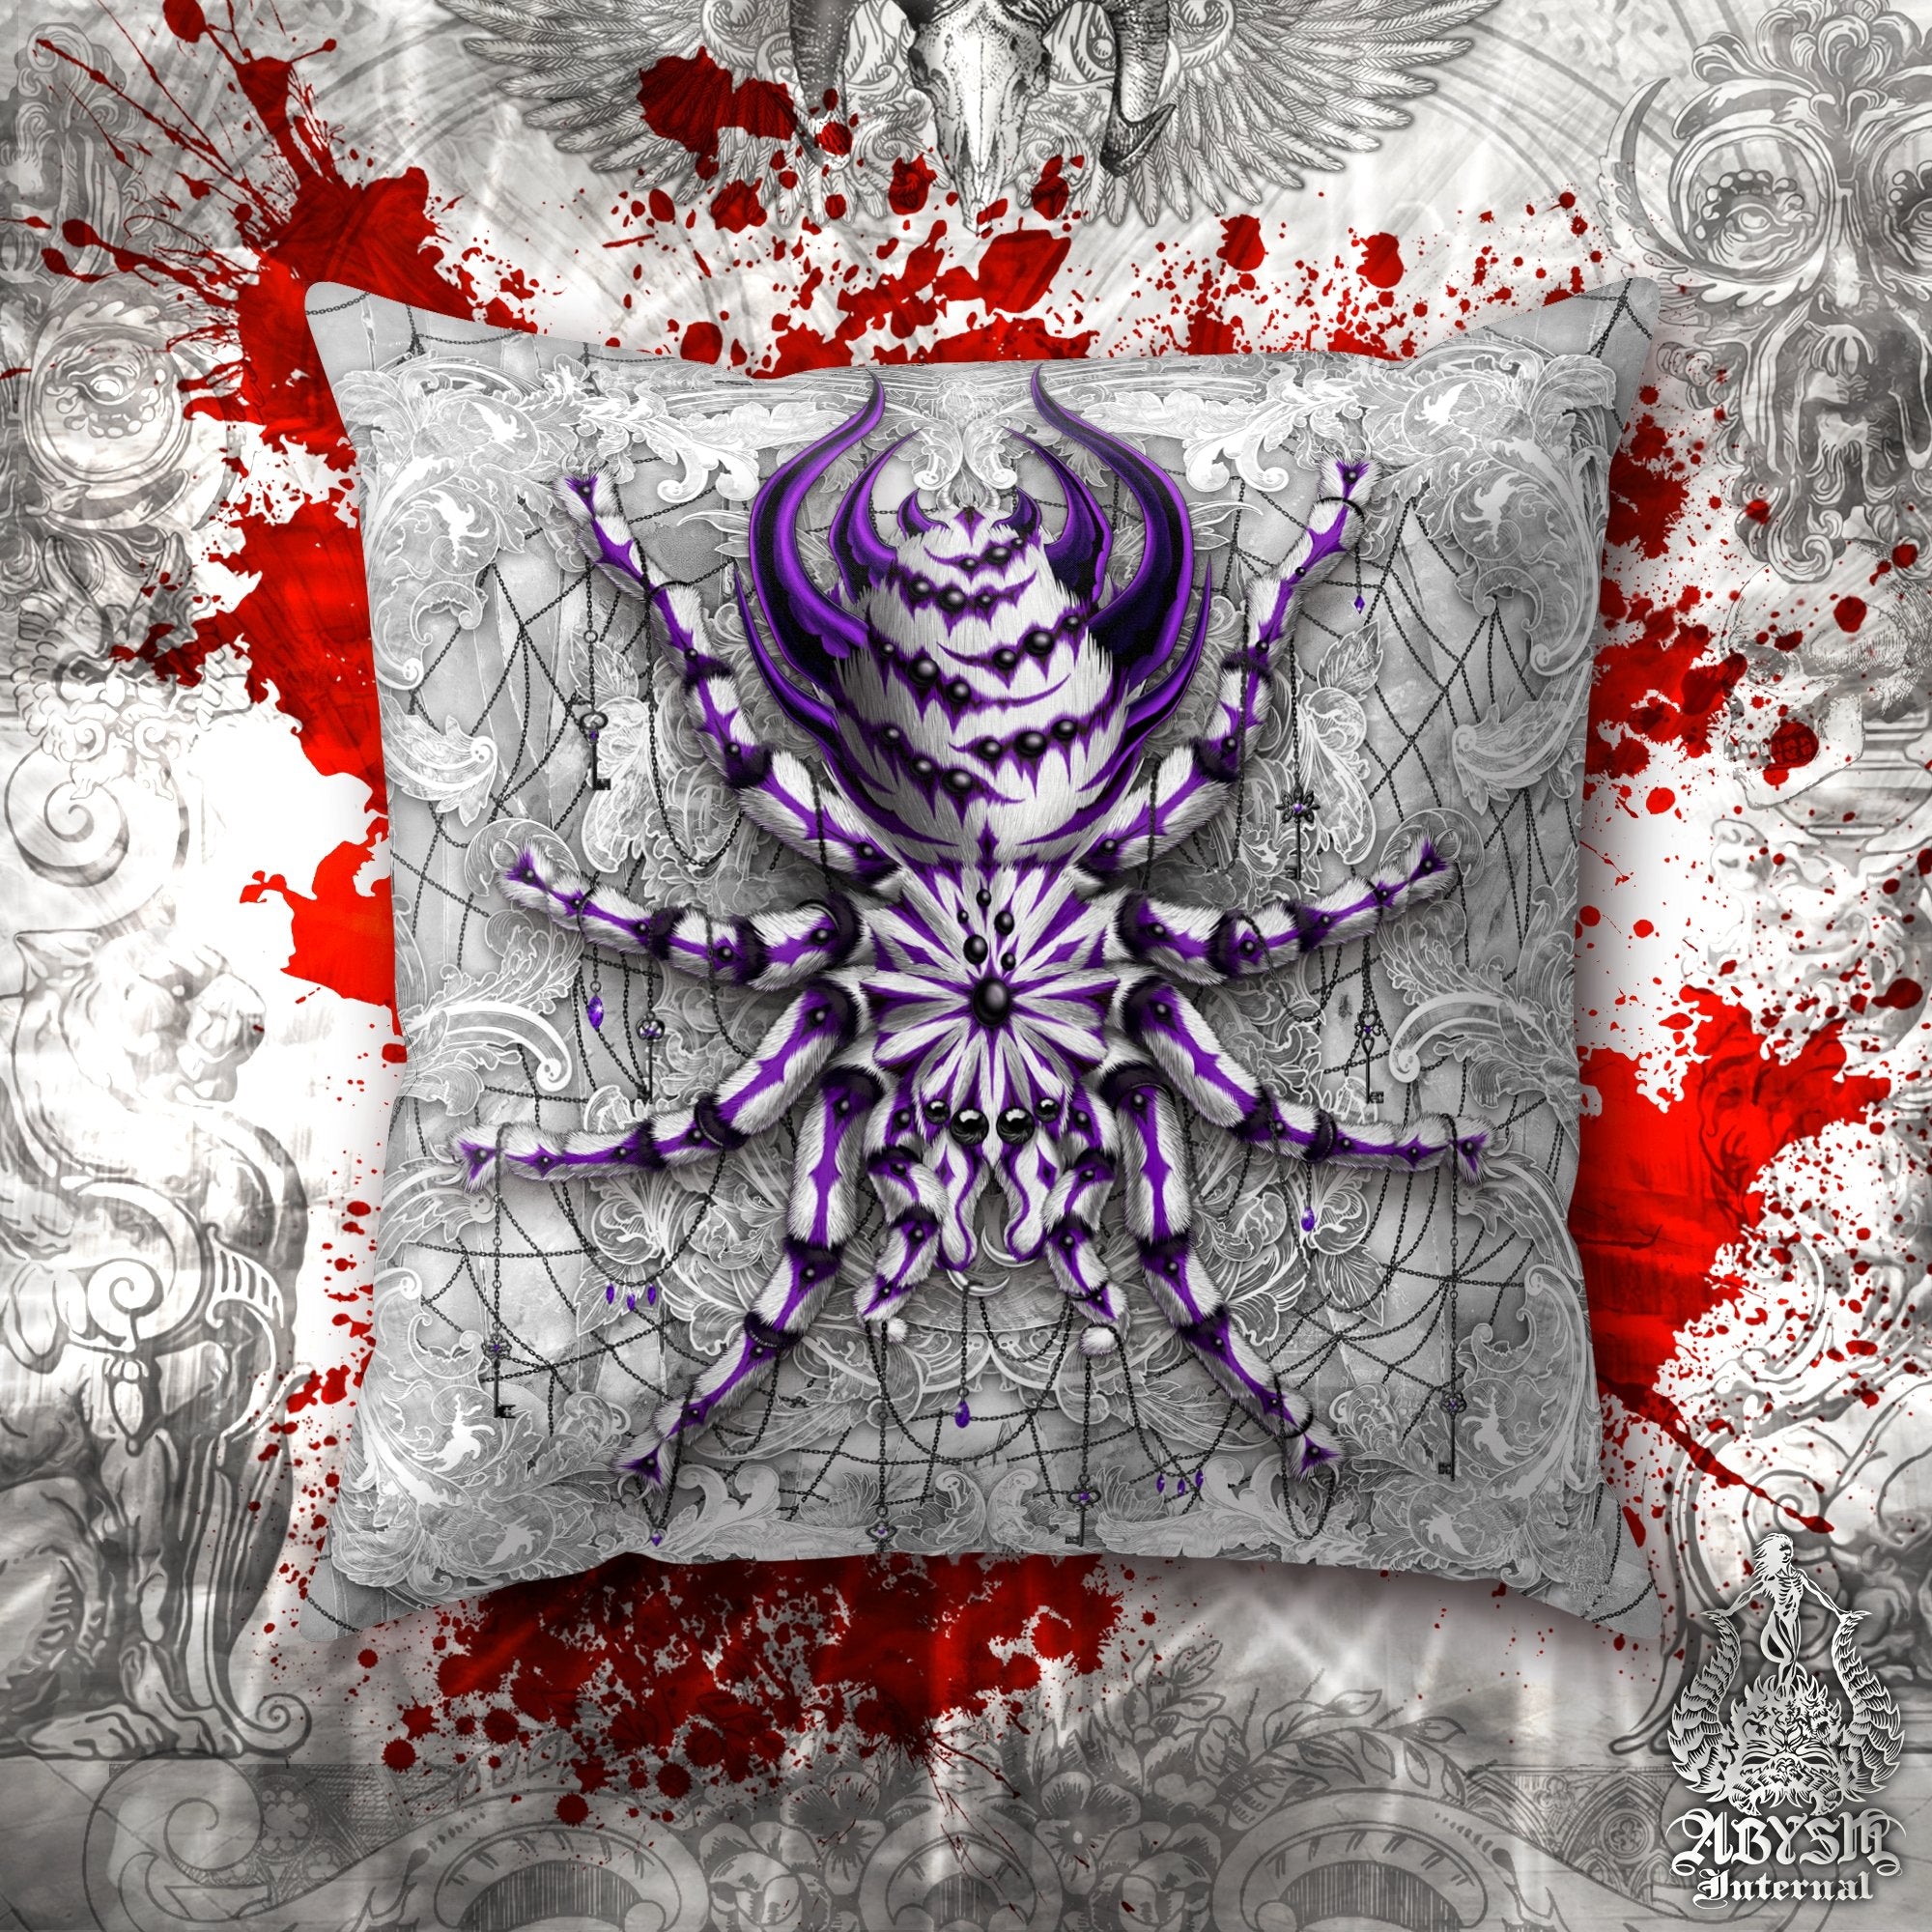 White Goth Throw Pillow, Decorative Accent Cushion, Gothic Room Decor, Alternative Home - Tarantula, Spider, Stone, Purple - Abysm Internal